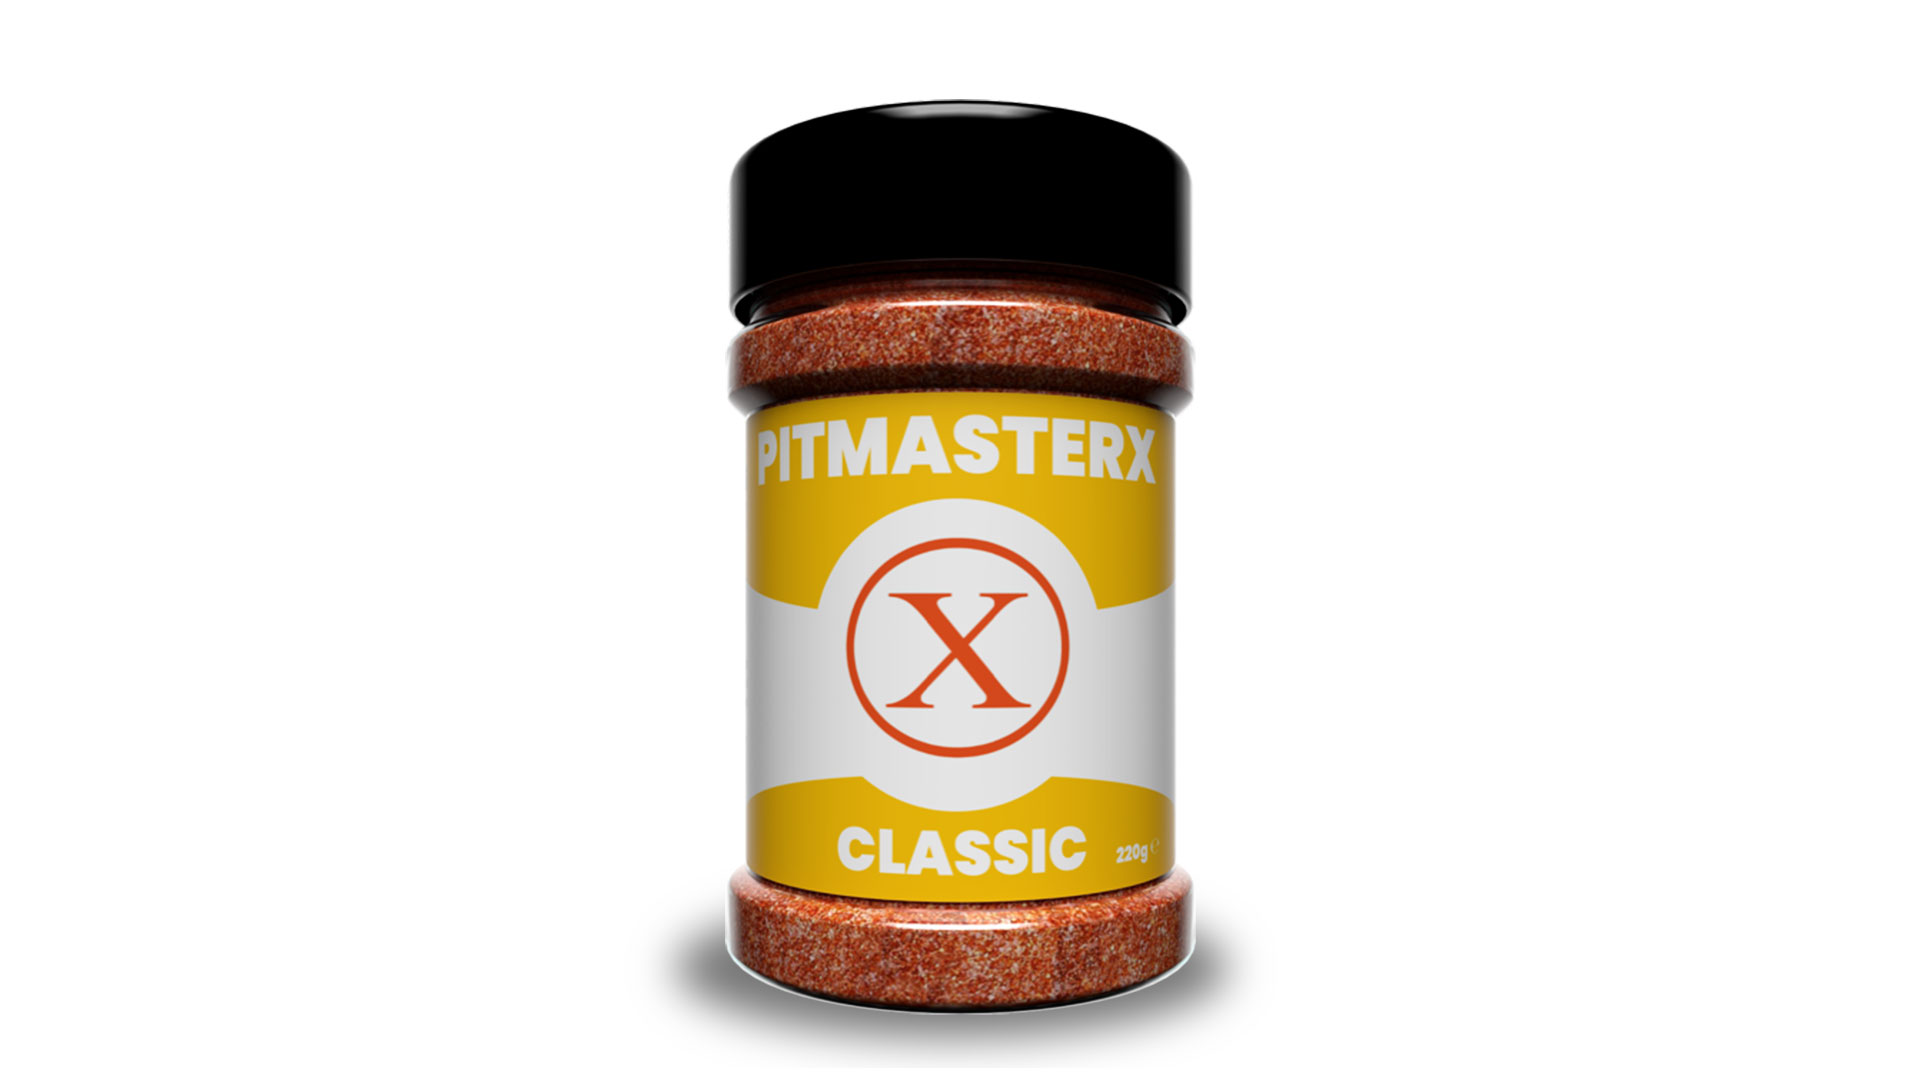 CLASSIC Rub | Pitmaster X | Gewürzzubereitung